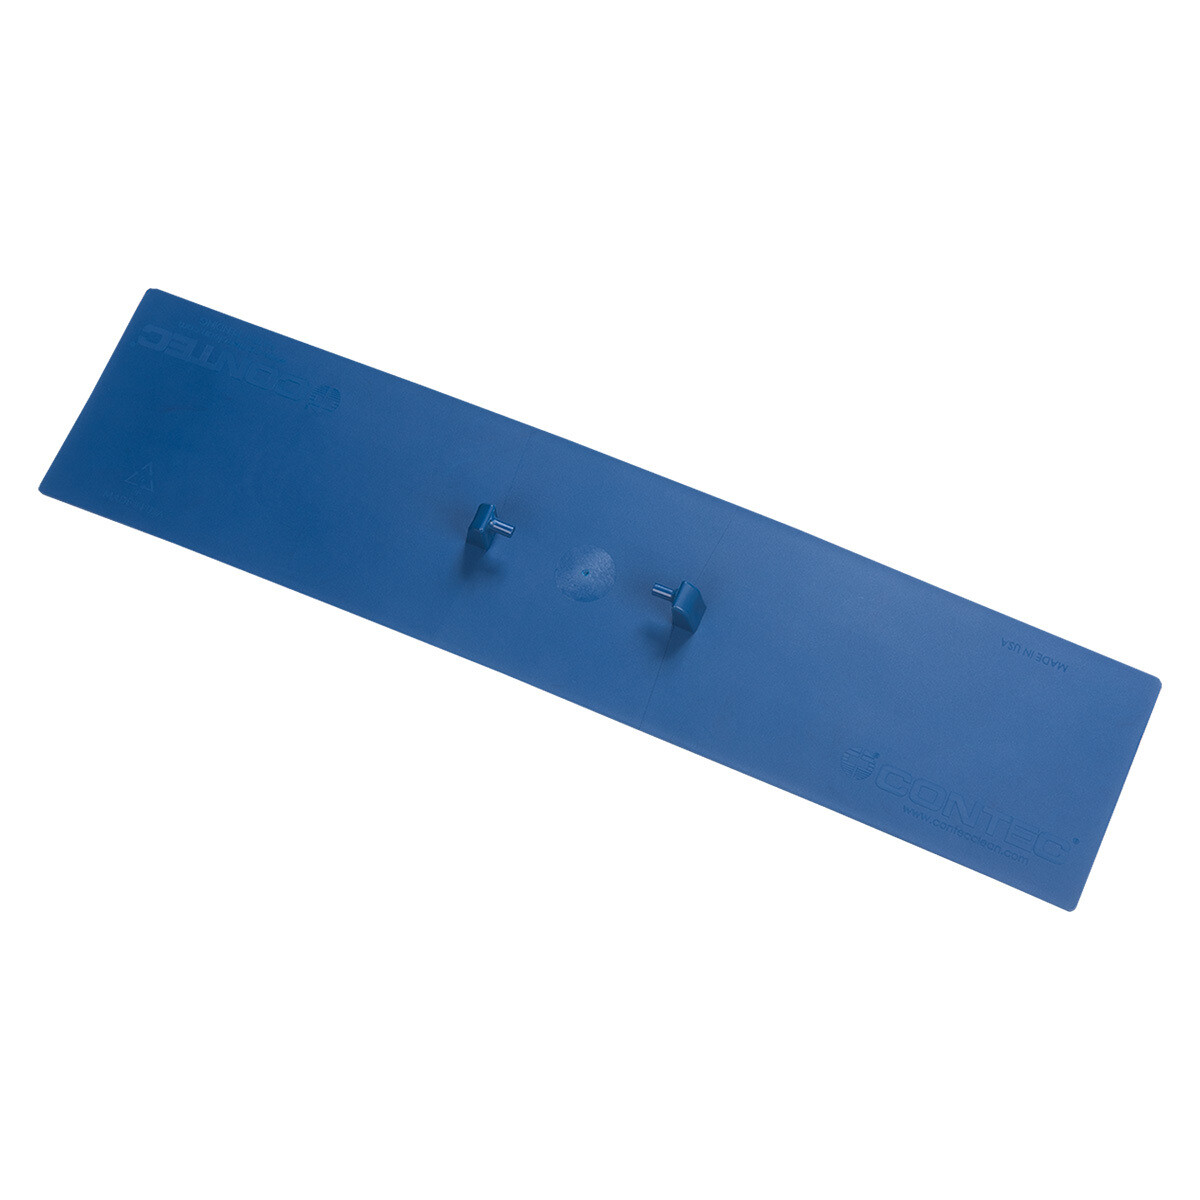 Zero Gravity Mop Head, blue polypropylene, Individually wrapped